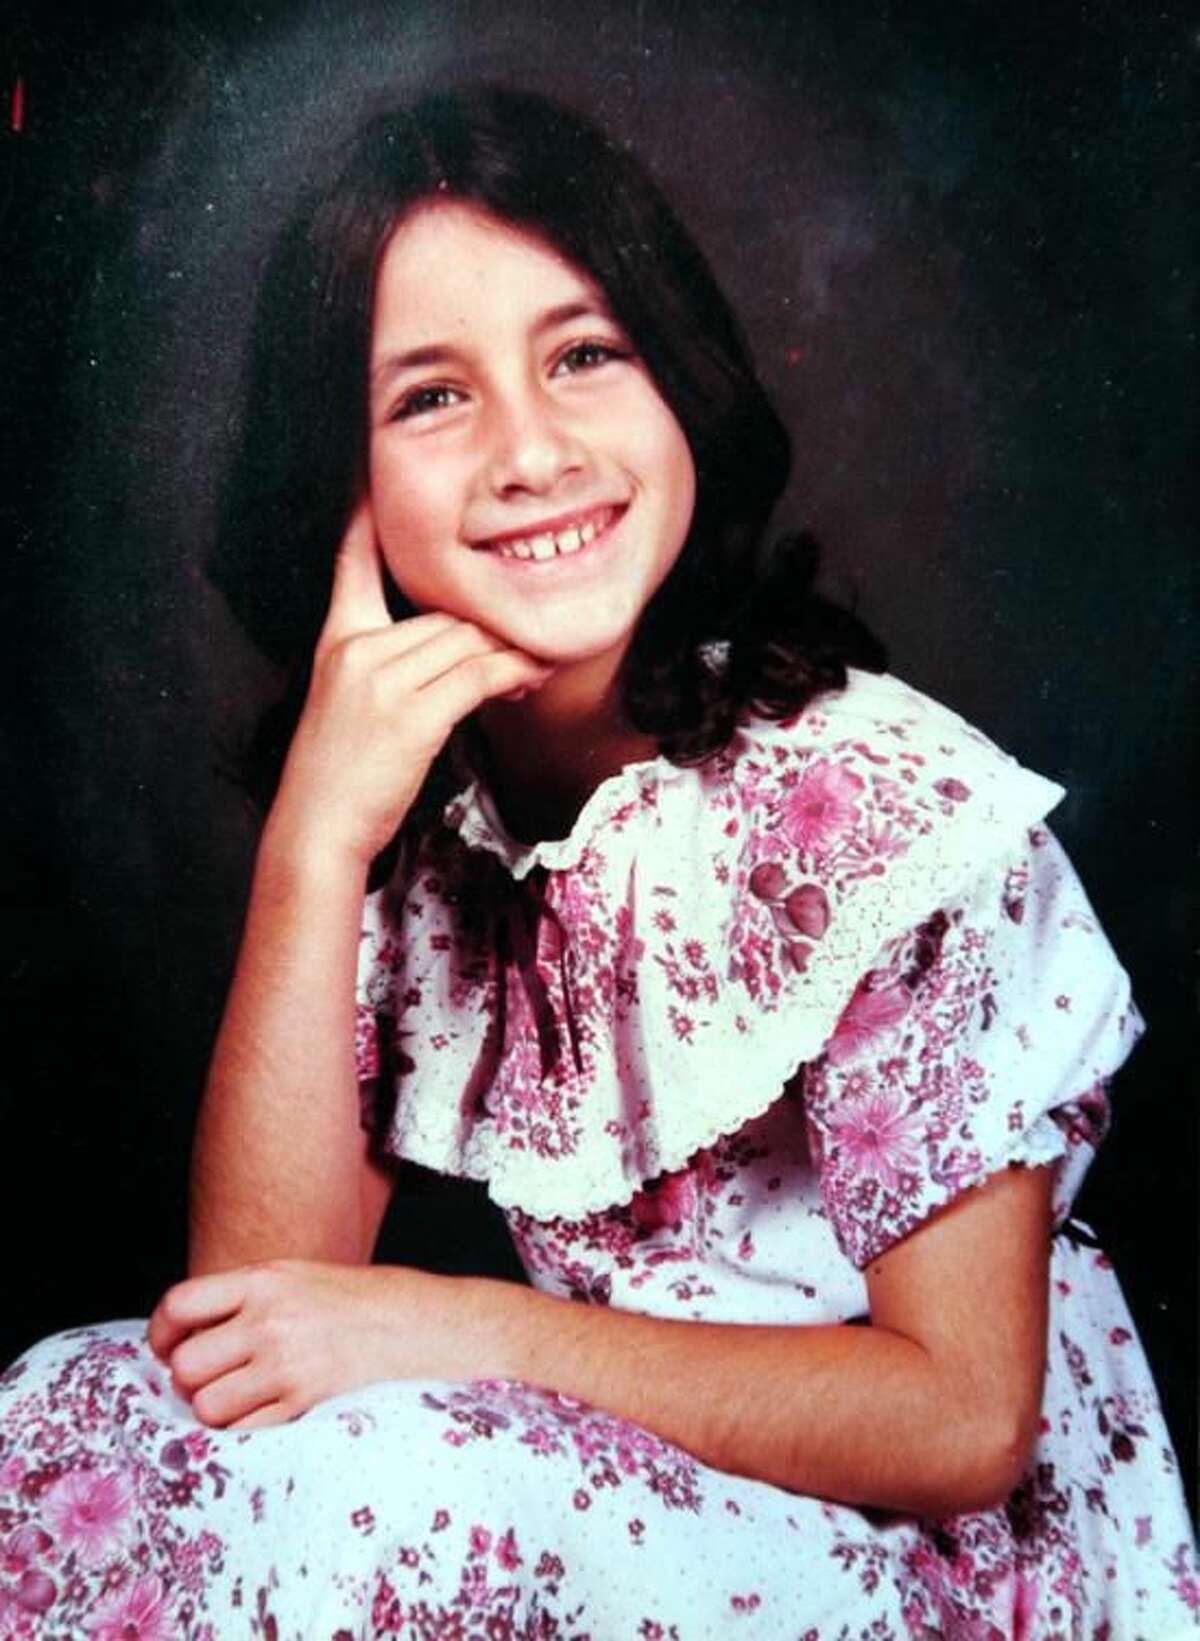 Doreen Vincent at age 8.